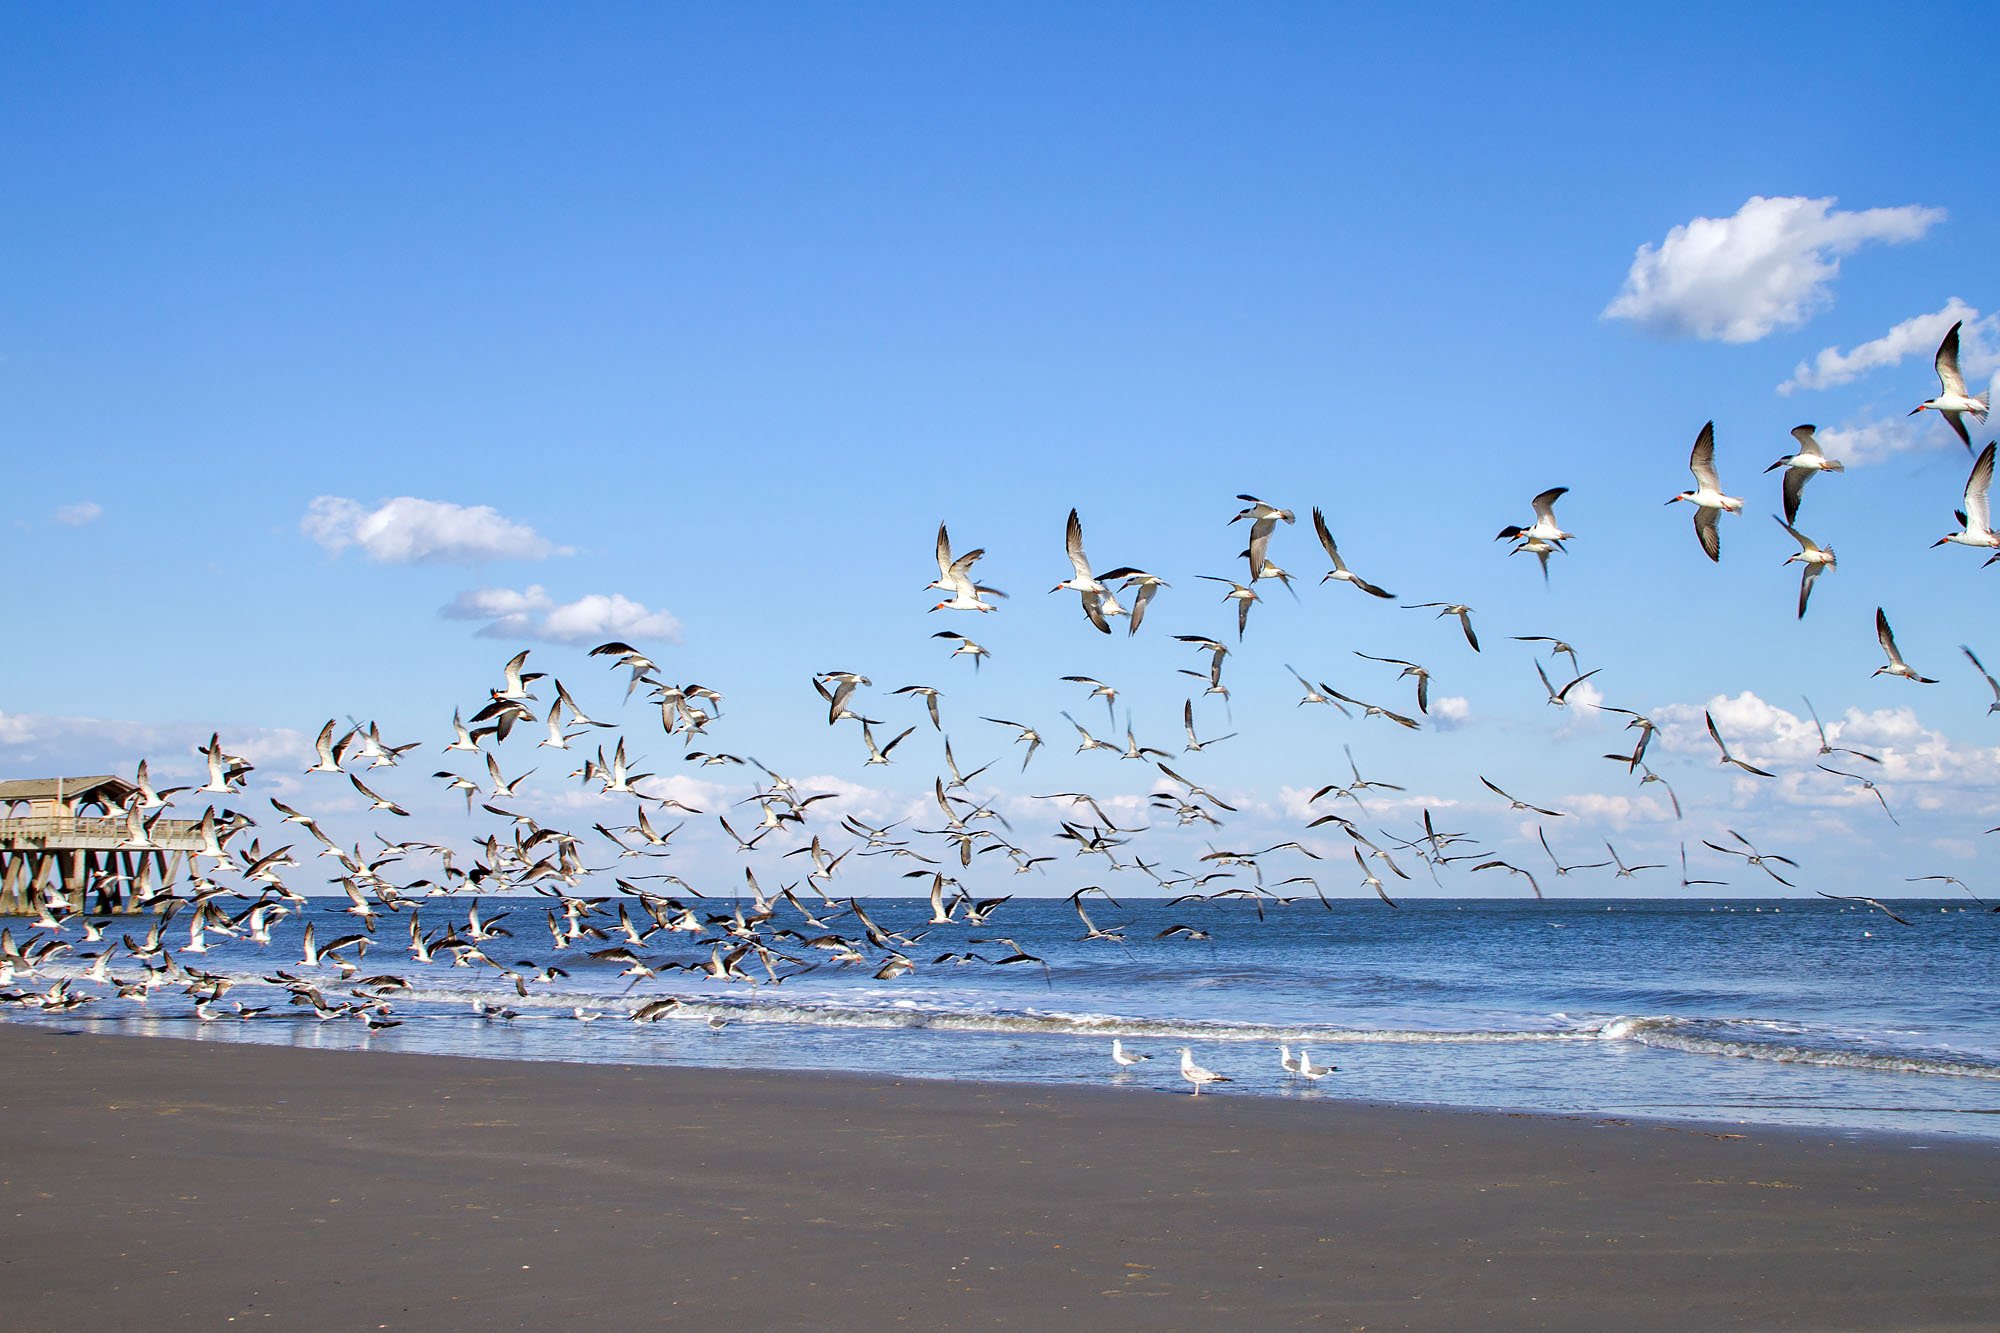 Tybee Island birds flying over the beach